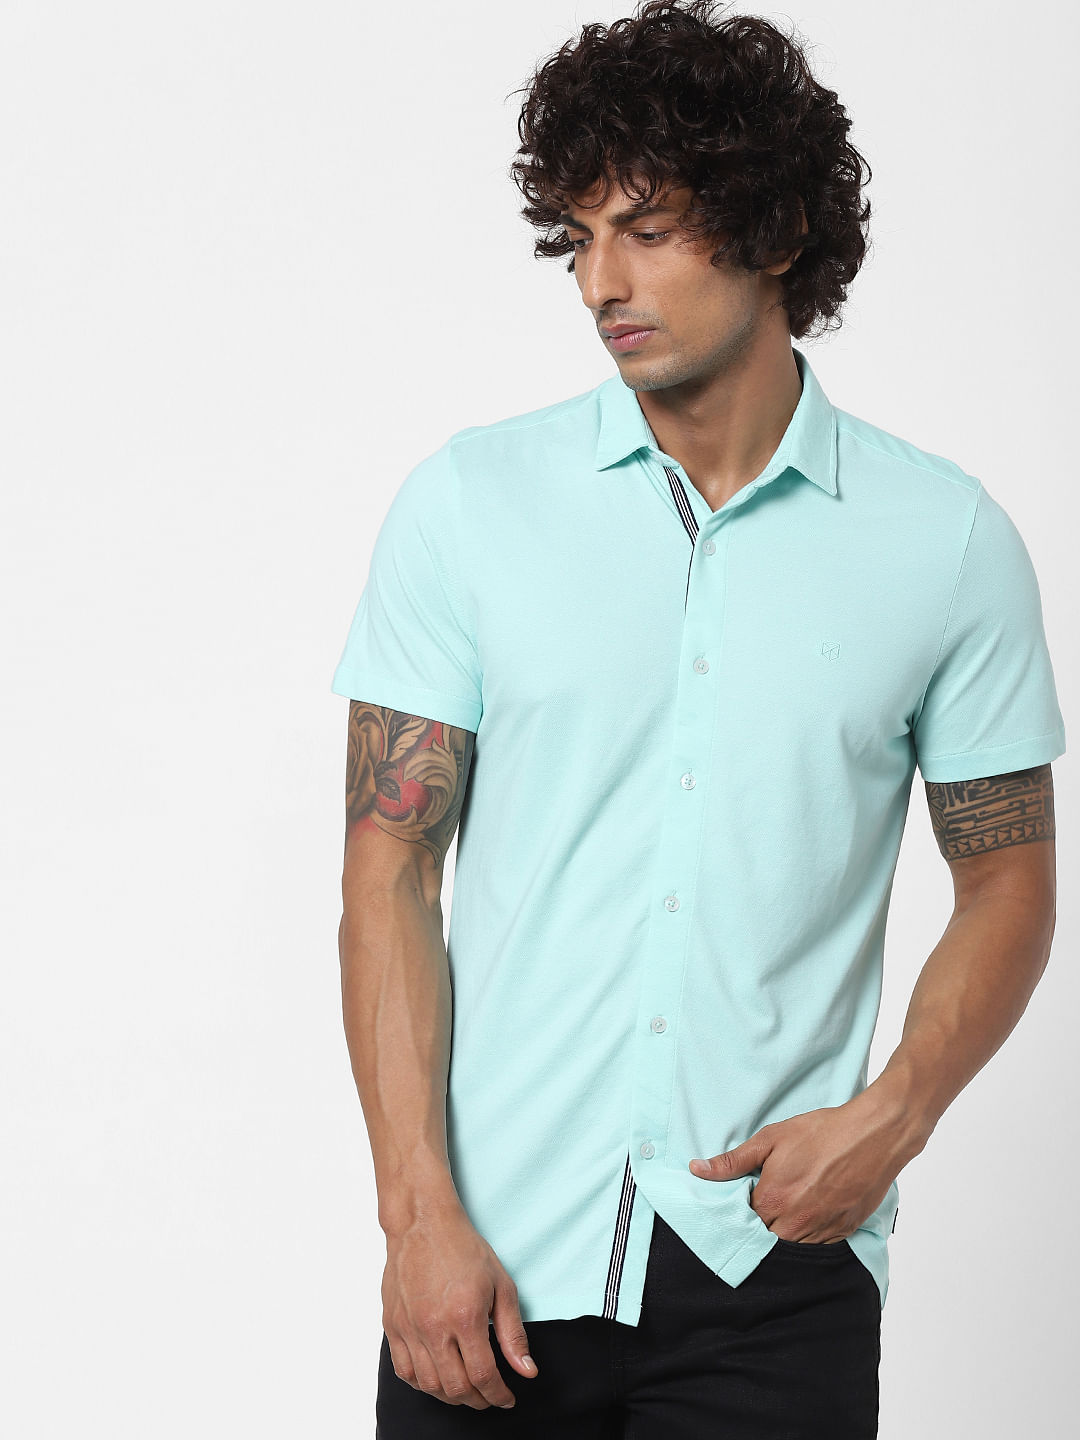 Fashion Formal Shirts Short Sleeve Shirts Lerros Short Sleeve Shirt pink check pattern business style 